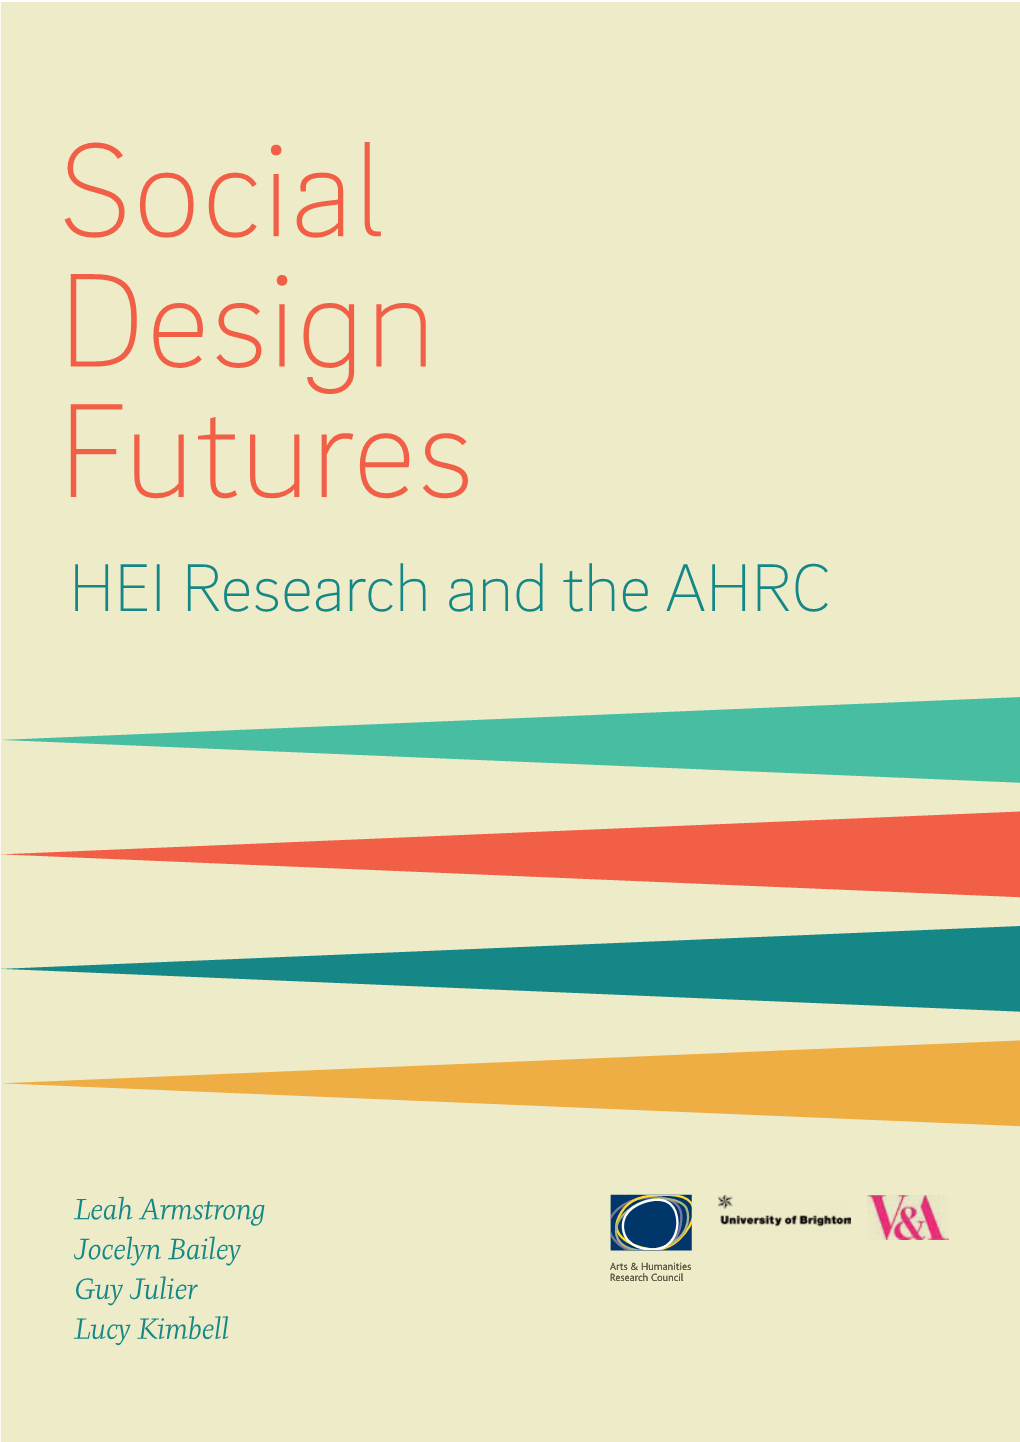 Social Design Futures: HEI Research and the AHRC 7 Executive Summary